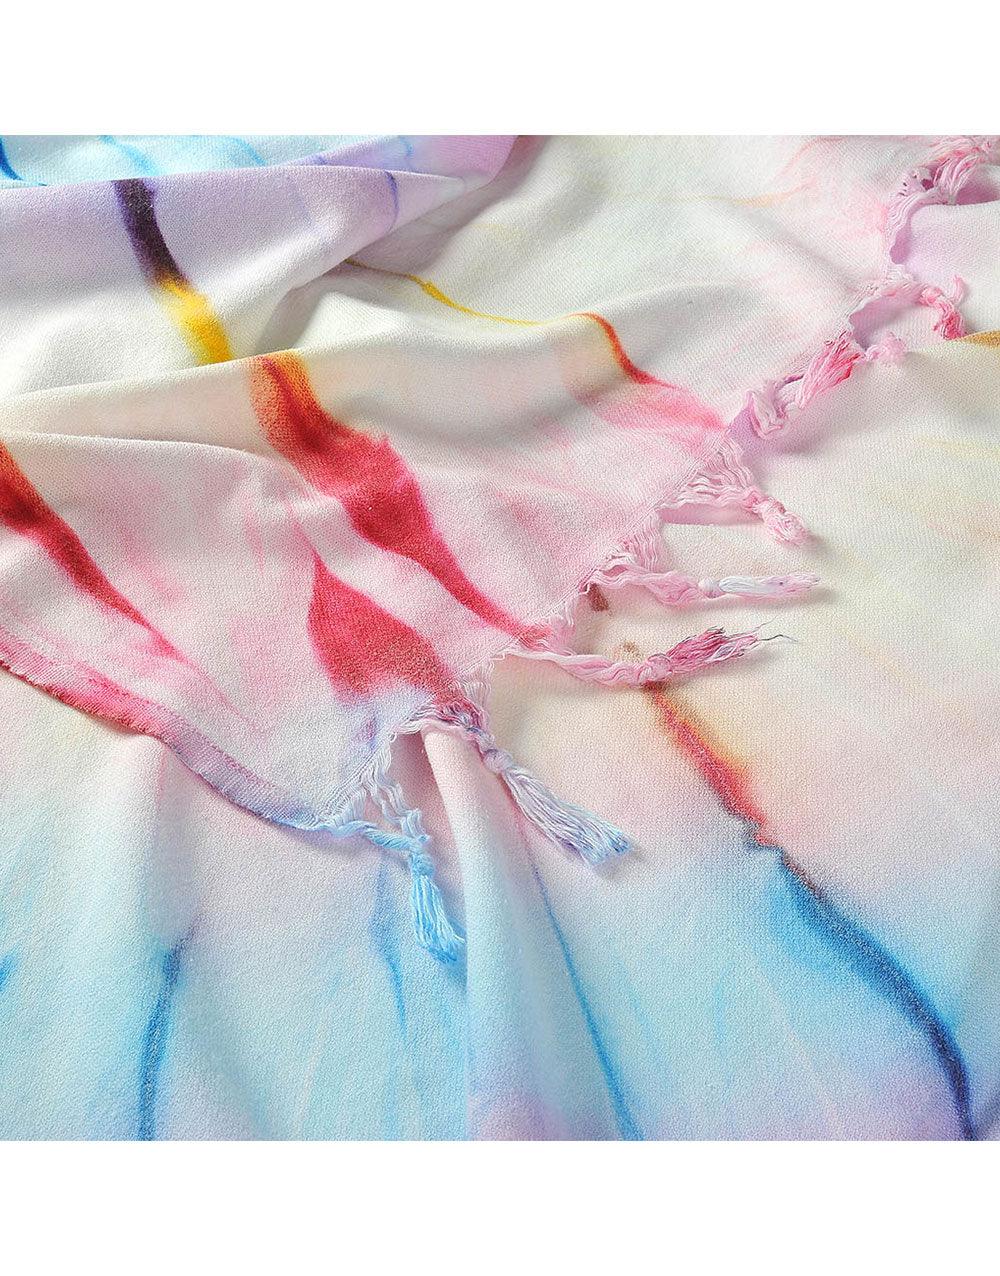 Cacala Tie Dye Peshtemal Towel Joy Series 36”x63” 100% Cotton - Cacala